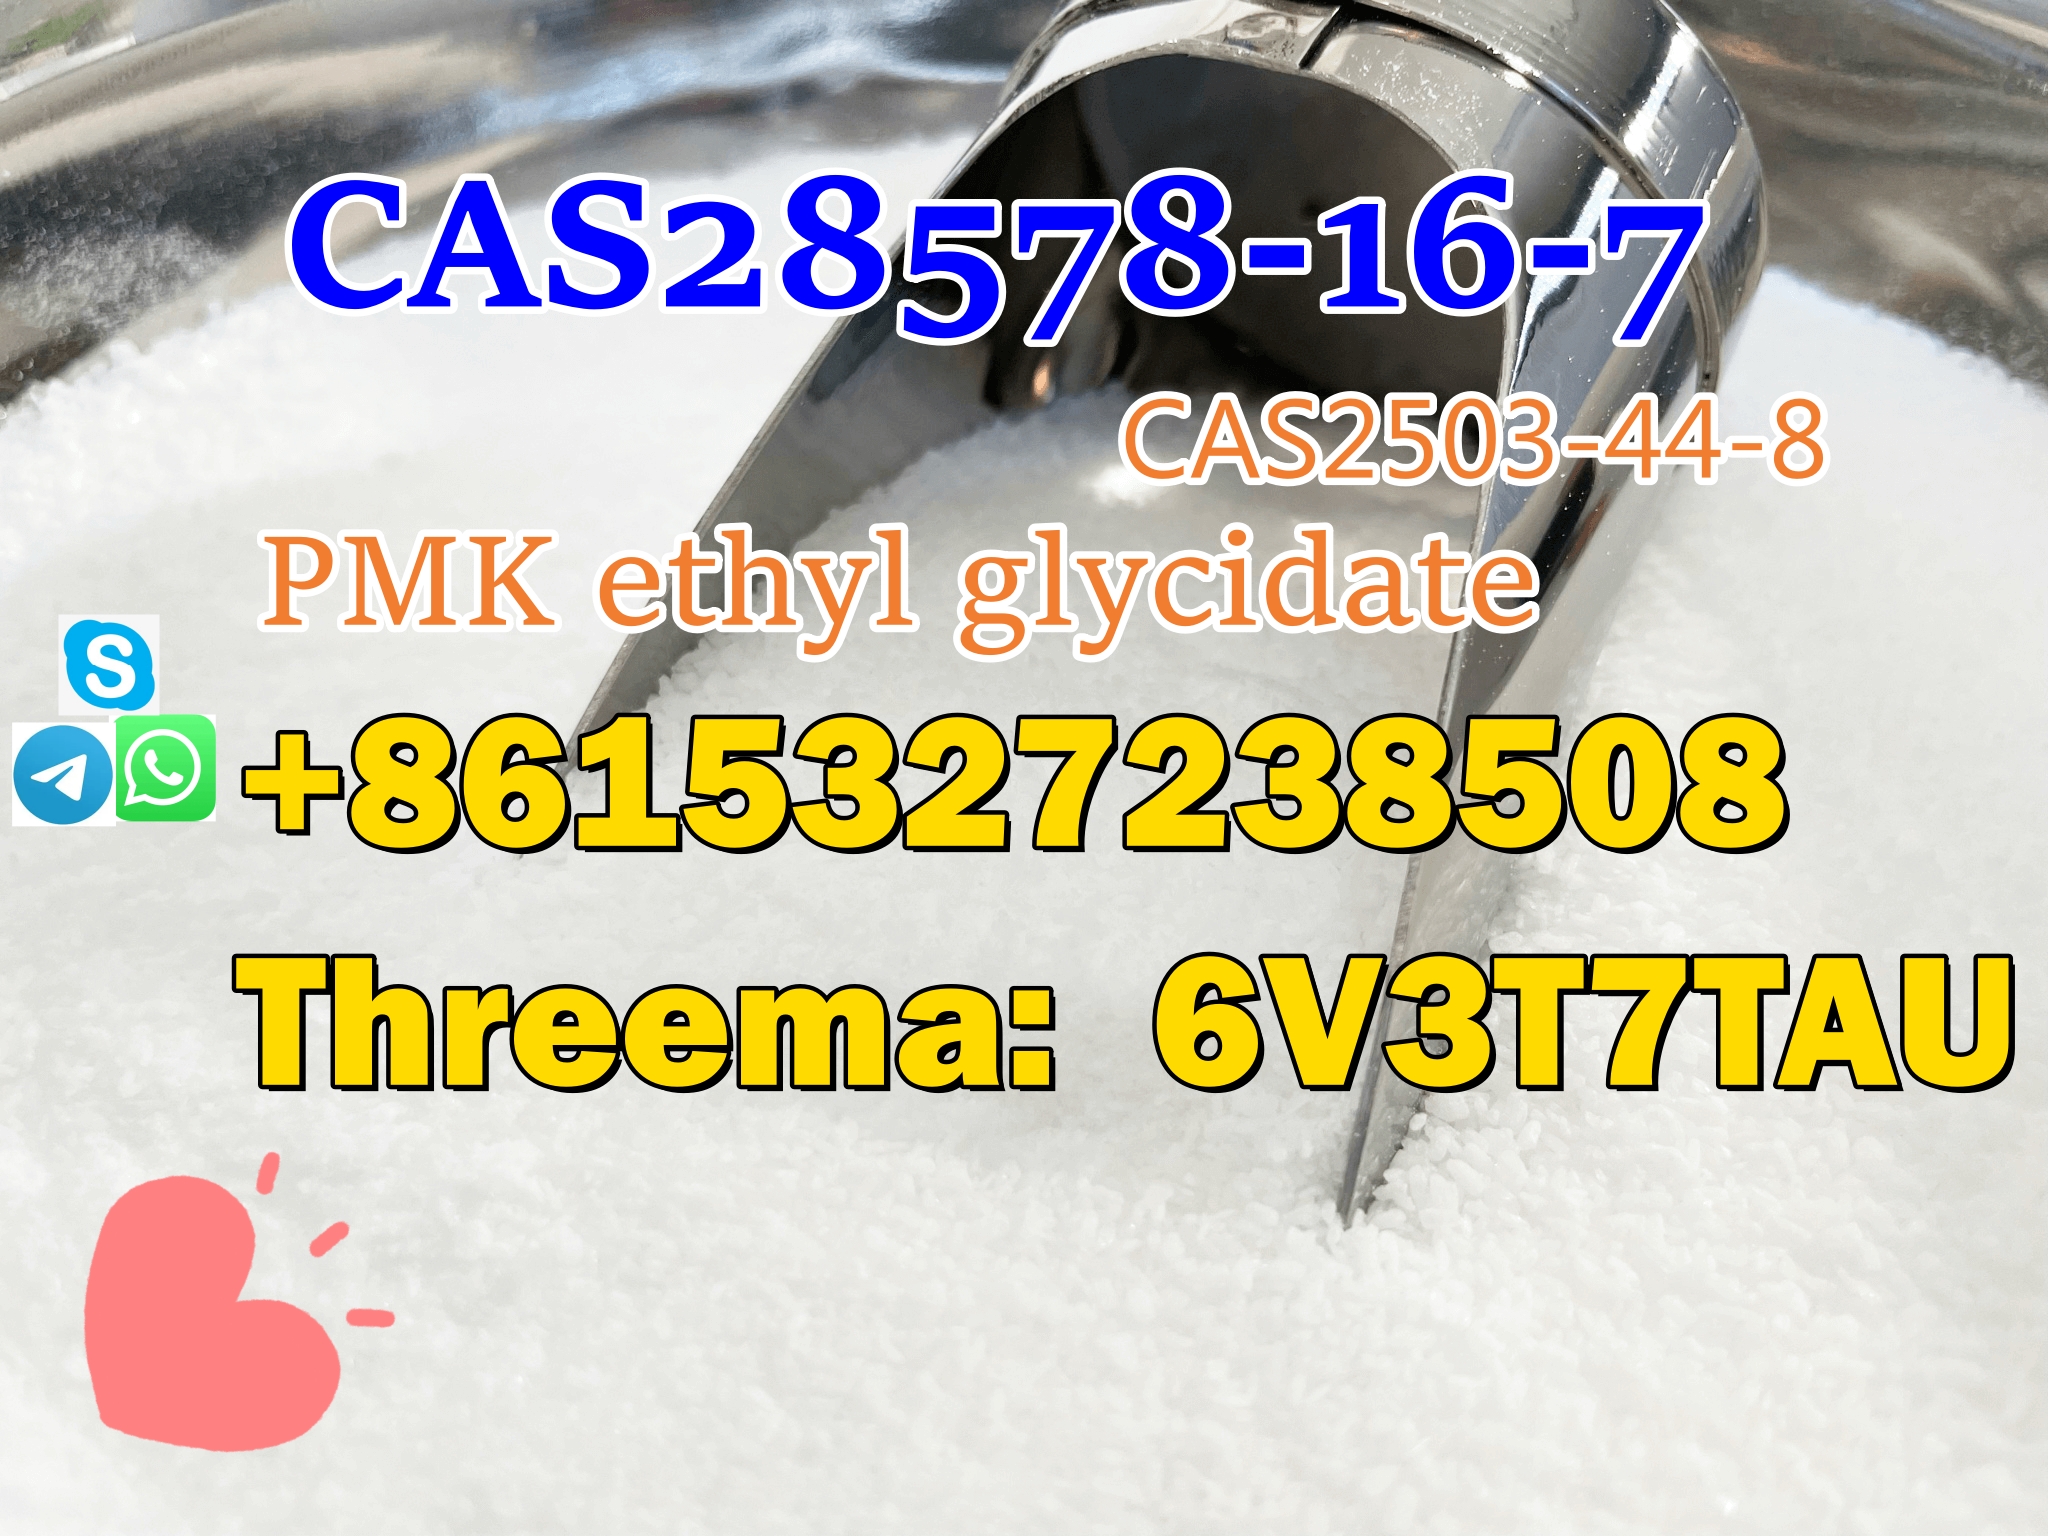 High Pure Pmk Ethyl Glycidate CAS No. 28578-16-7 Pmk Powder Raw Material รูปที่ 1